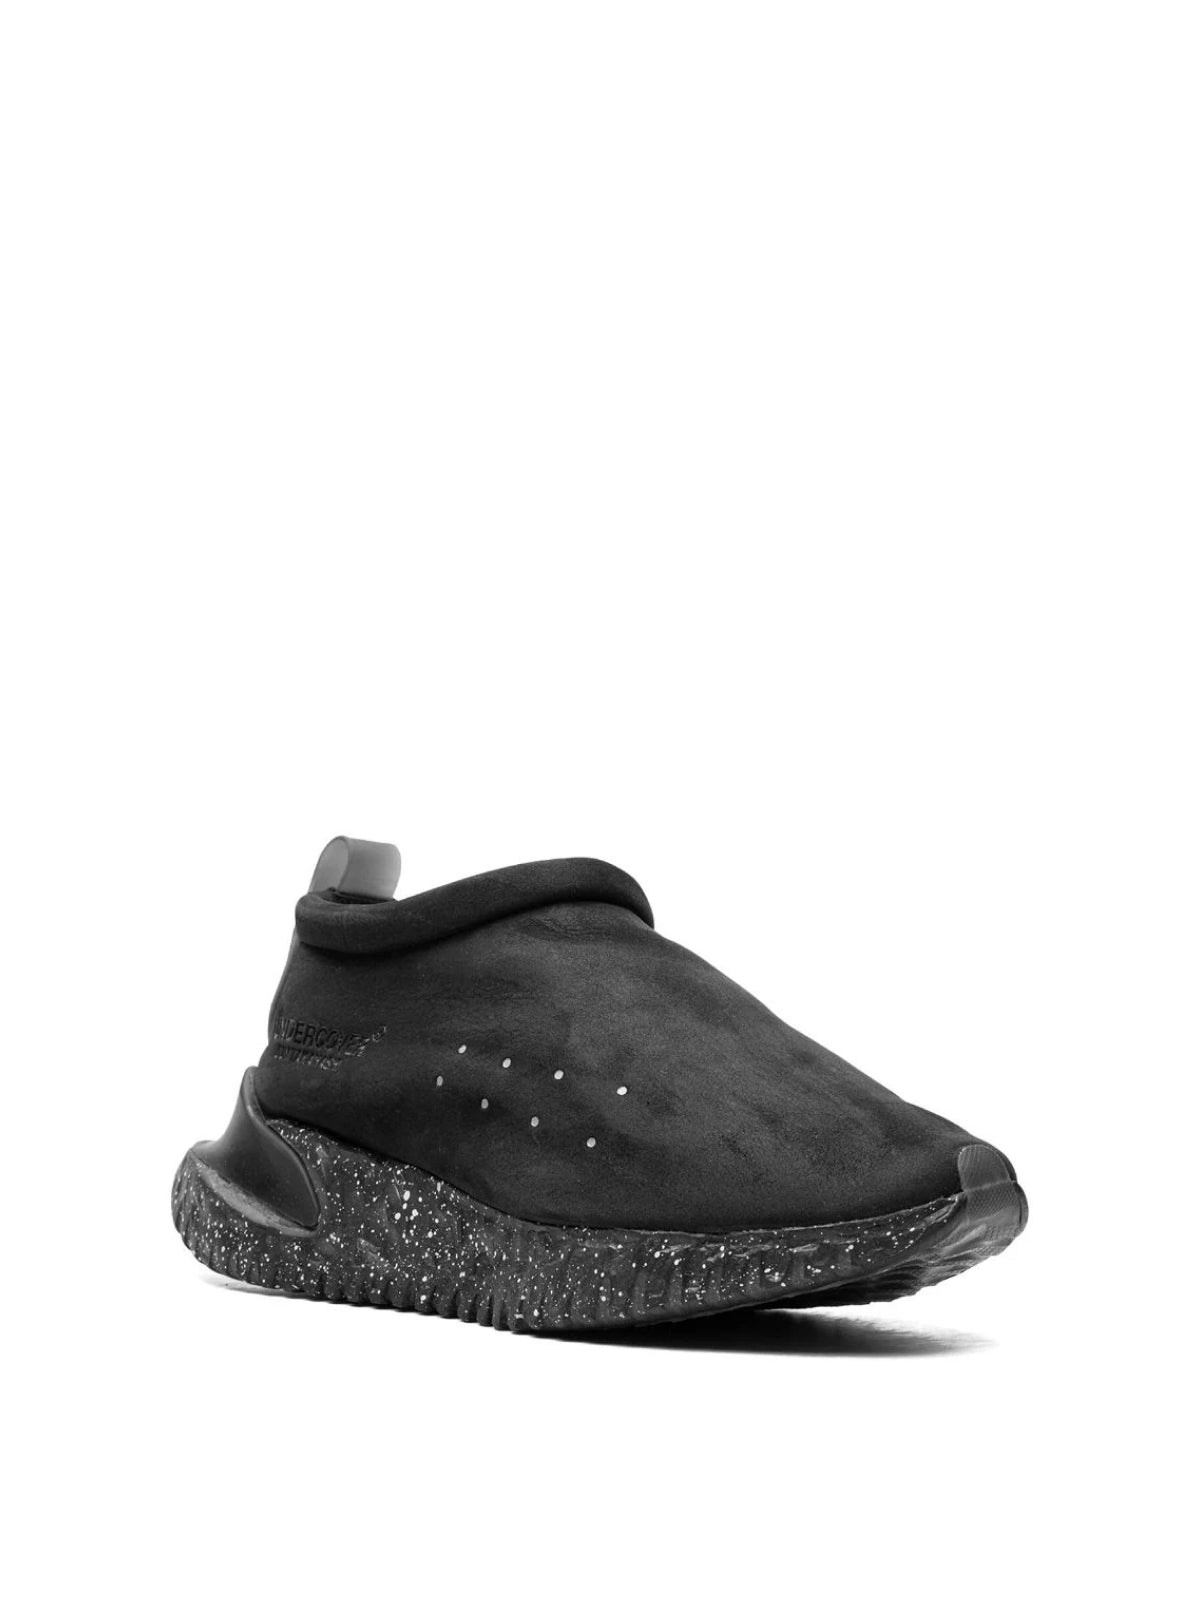 Nike-OUTLET-SALE-Nike Moc Flow SP x Undercover Sneakers-ARCHIVIST